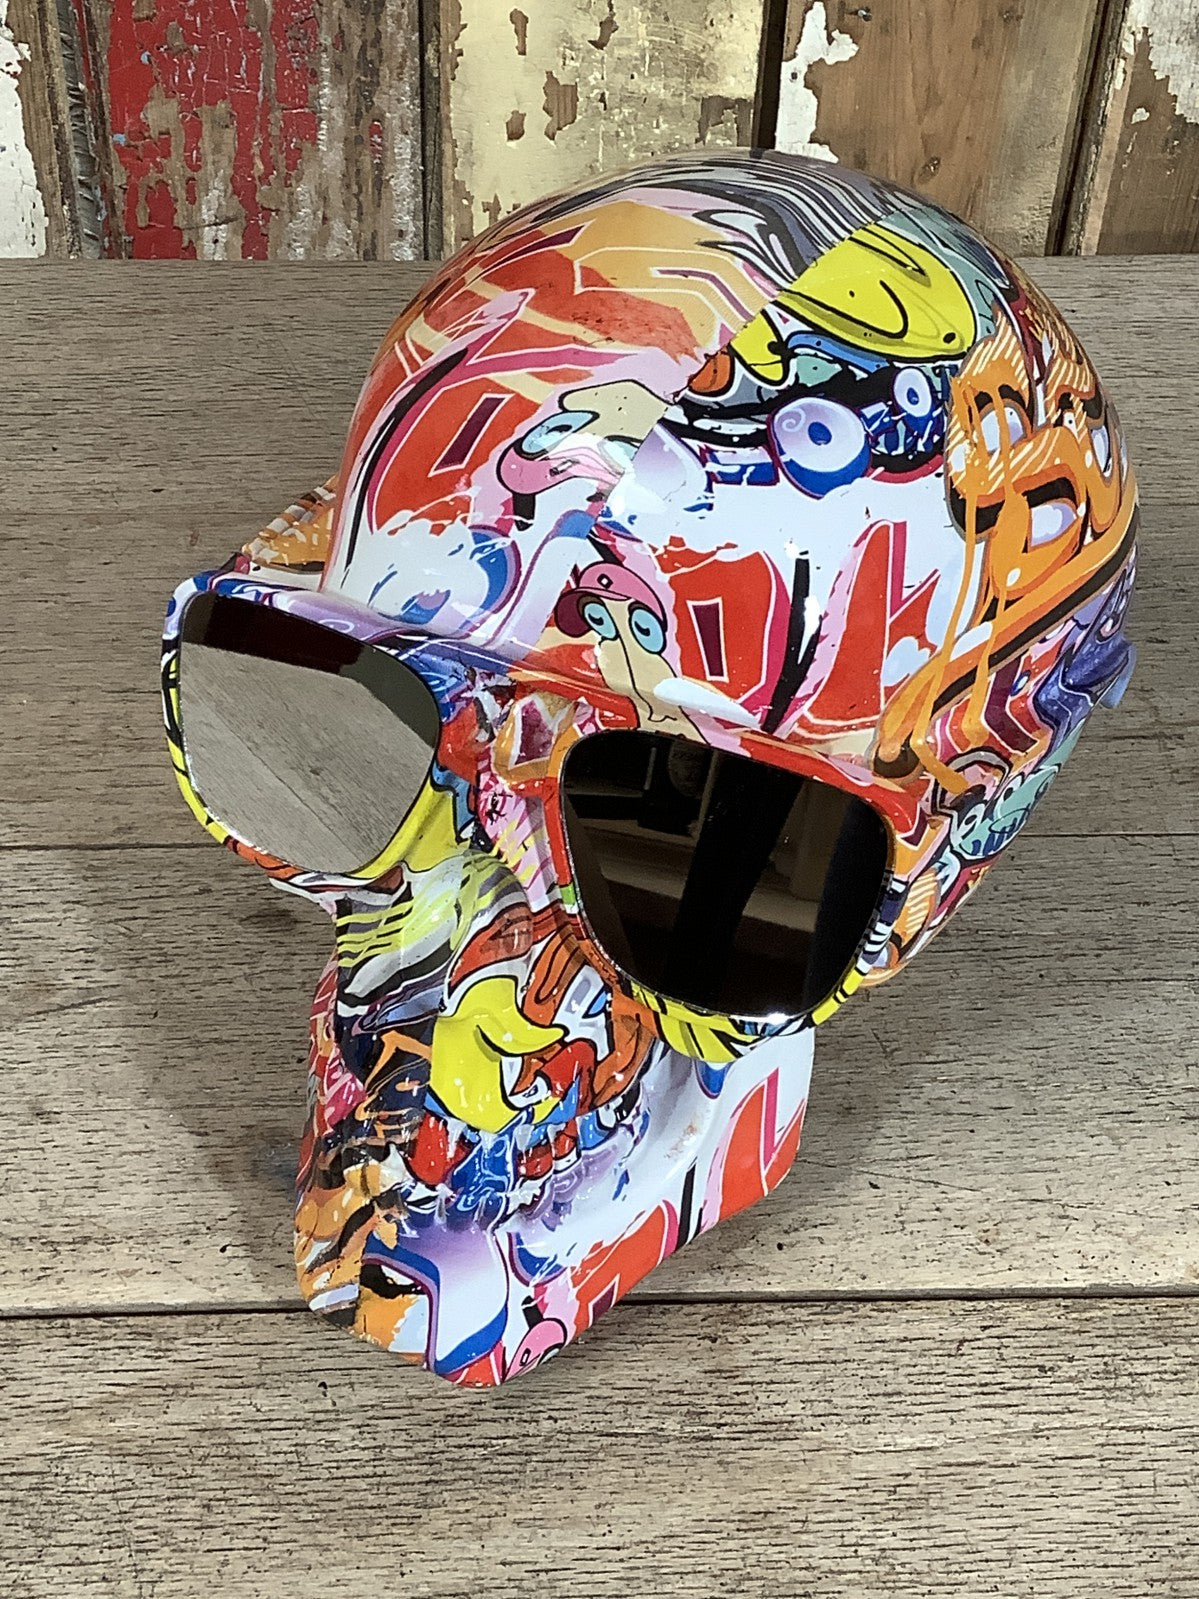 Colourful Steampunk Graffiti Covered Skull With Mirrored Sunglasses Fantastic